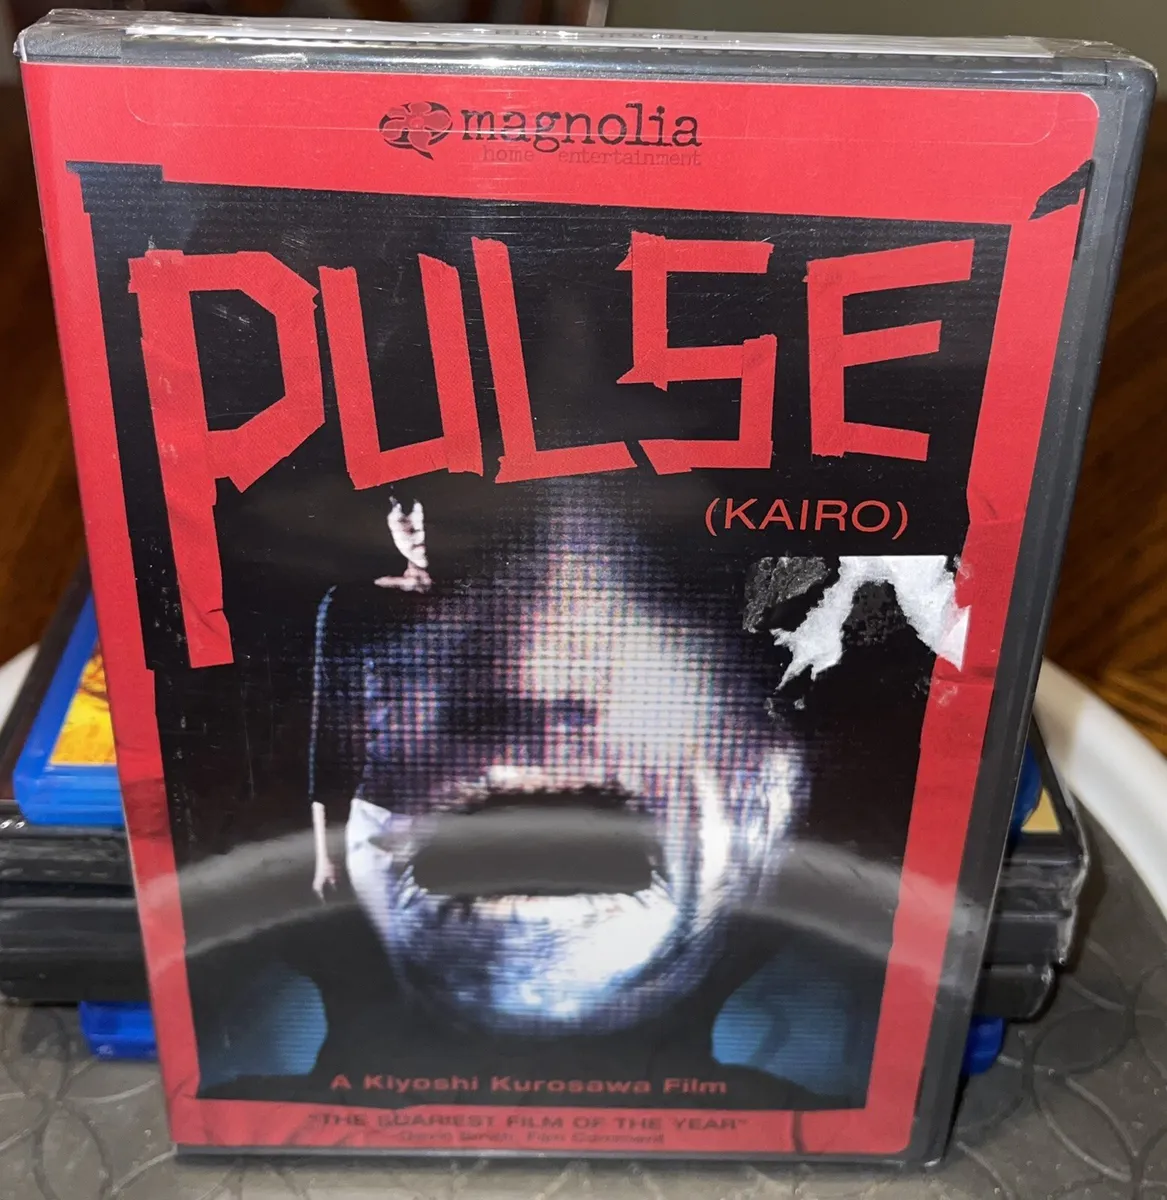 Pulse (KAIRO) DVD Kiyoshi Kurosawa Japanese with English Subtitles